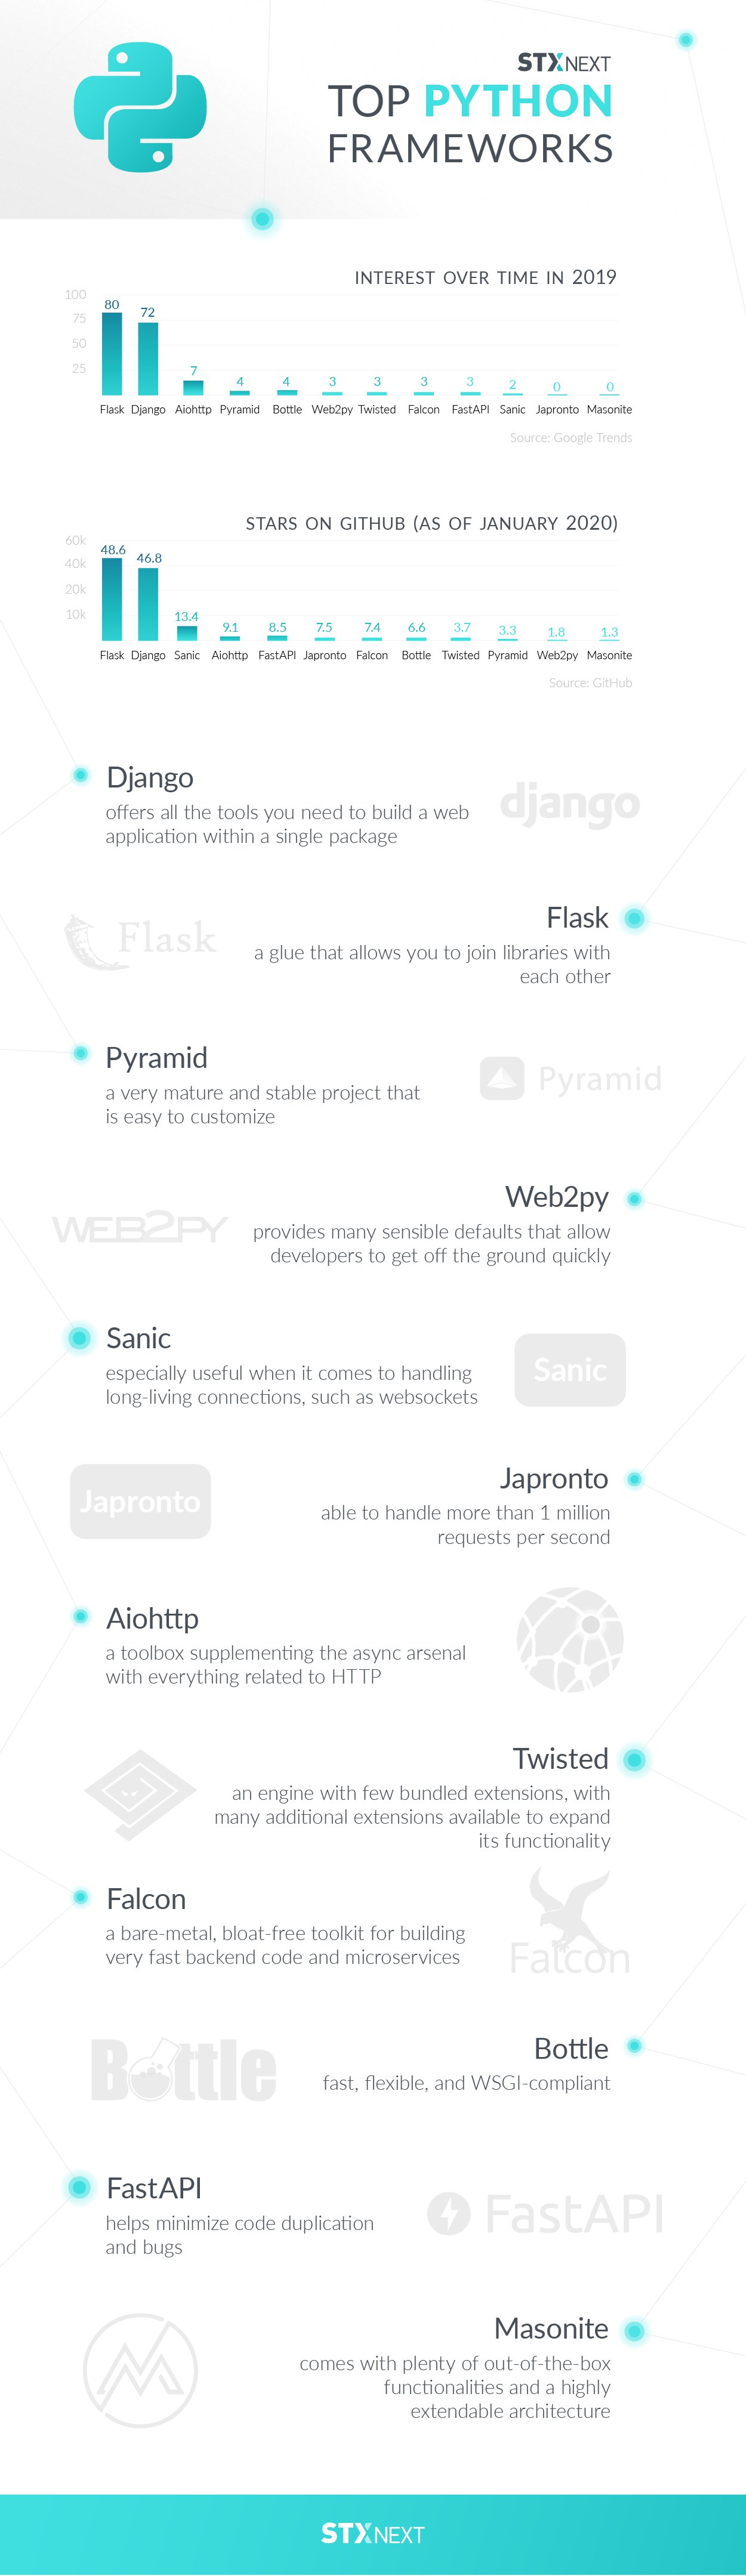 Top Python web frameworks—an infographic